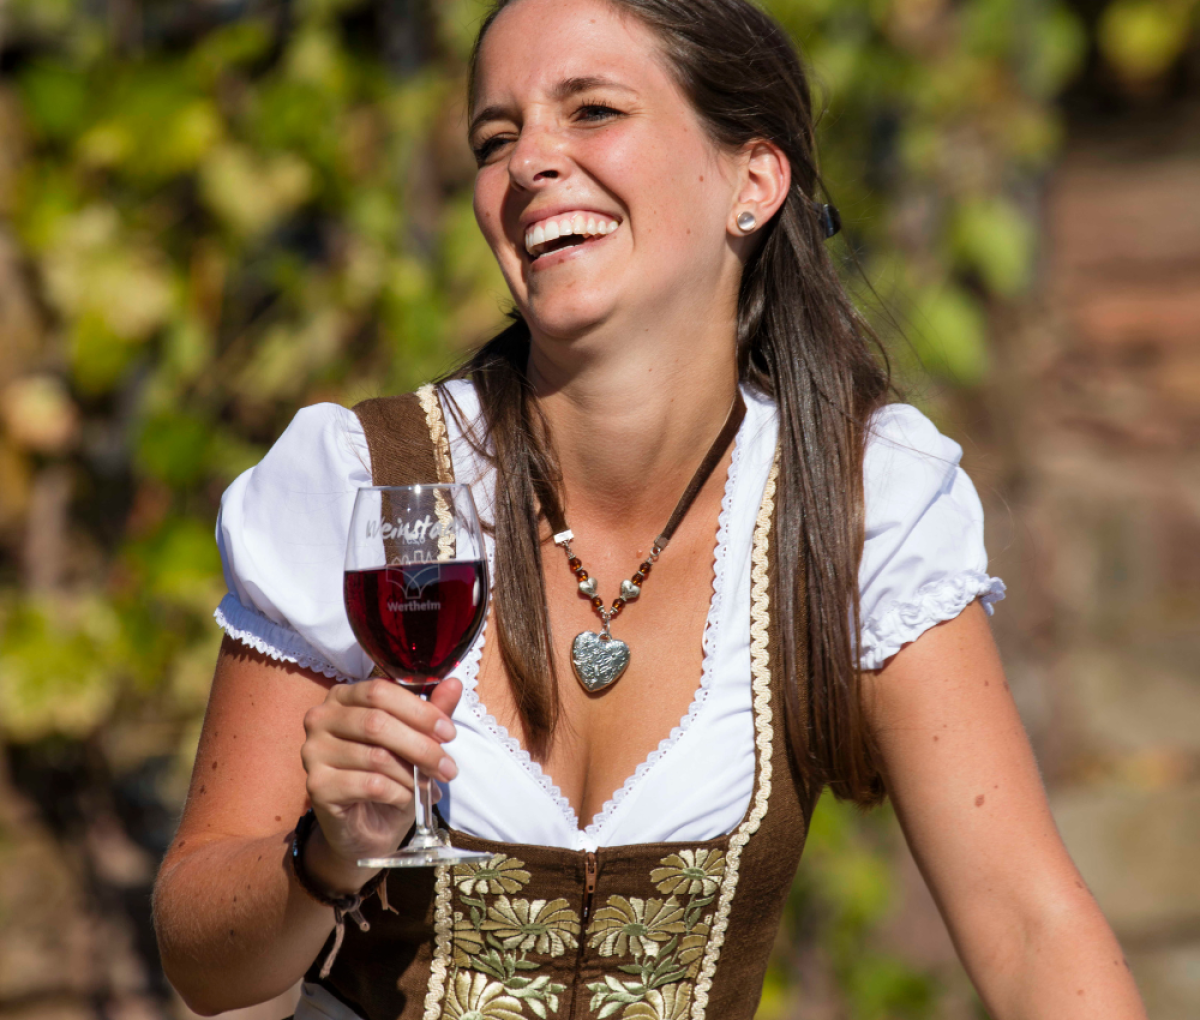 Woman enjoying wine in Wertheim, Germany